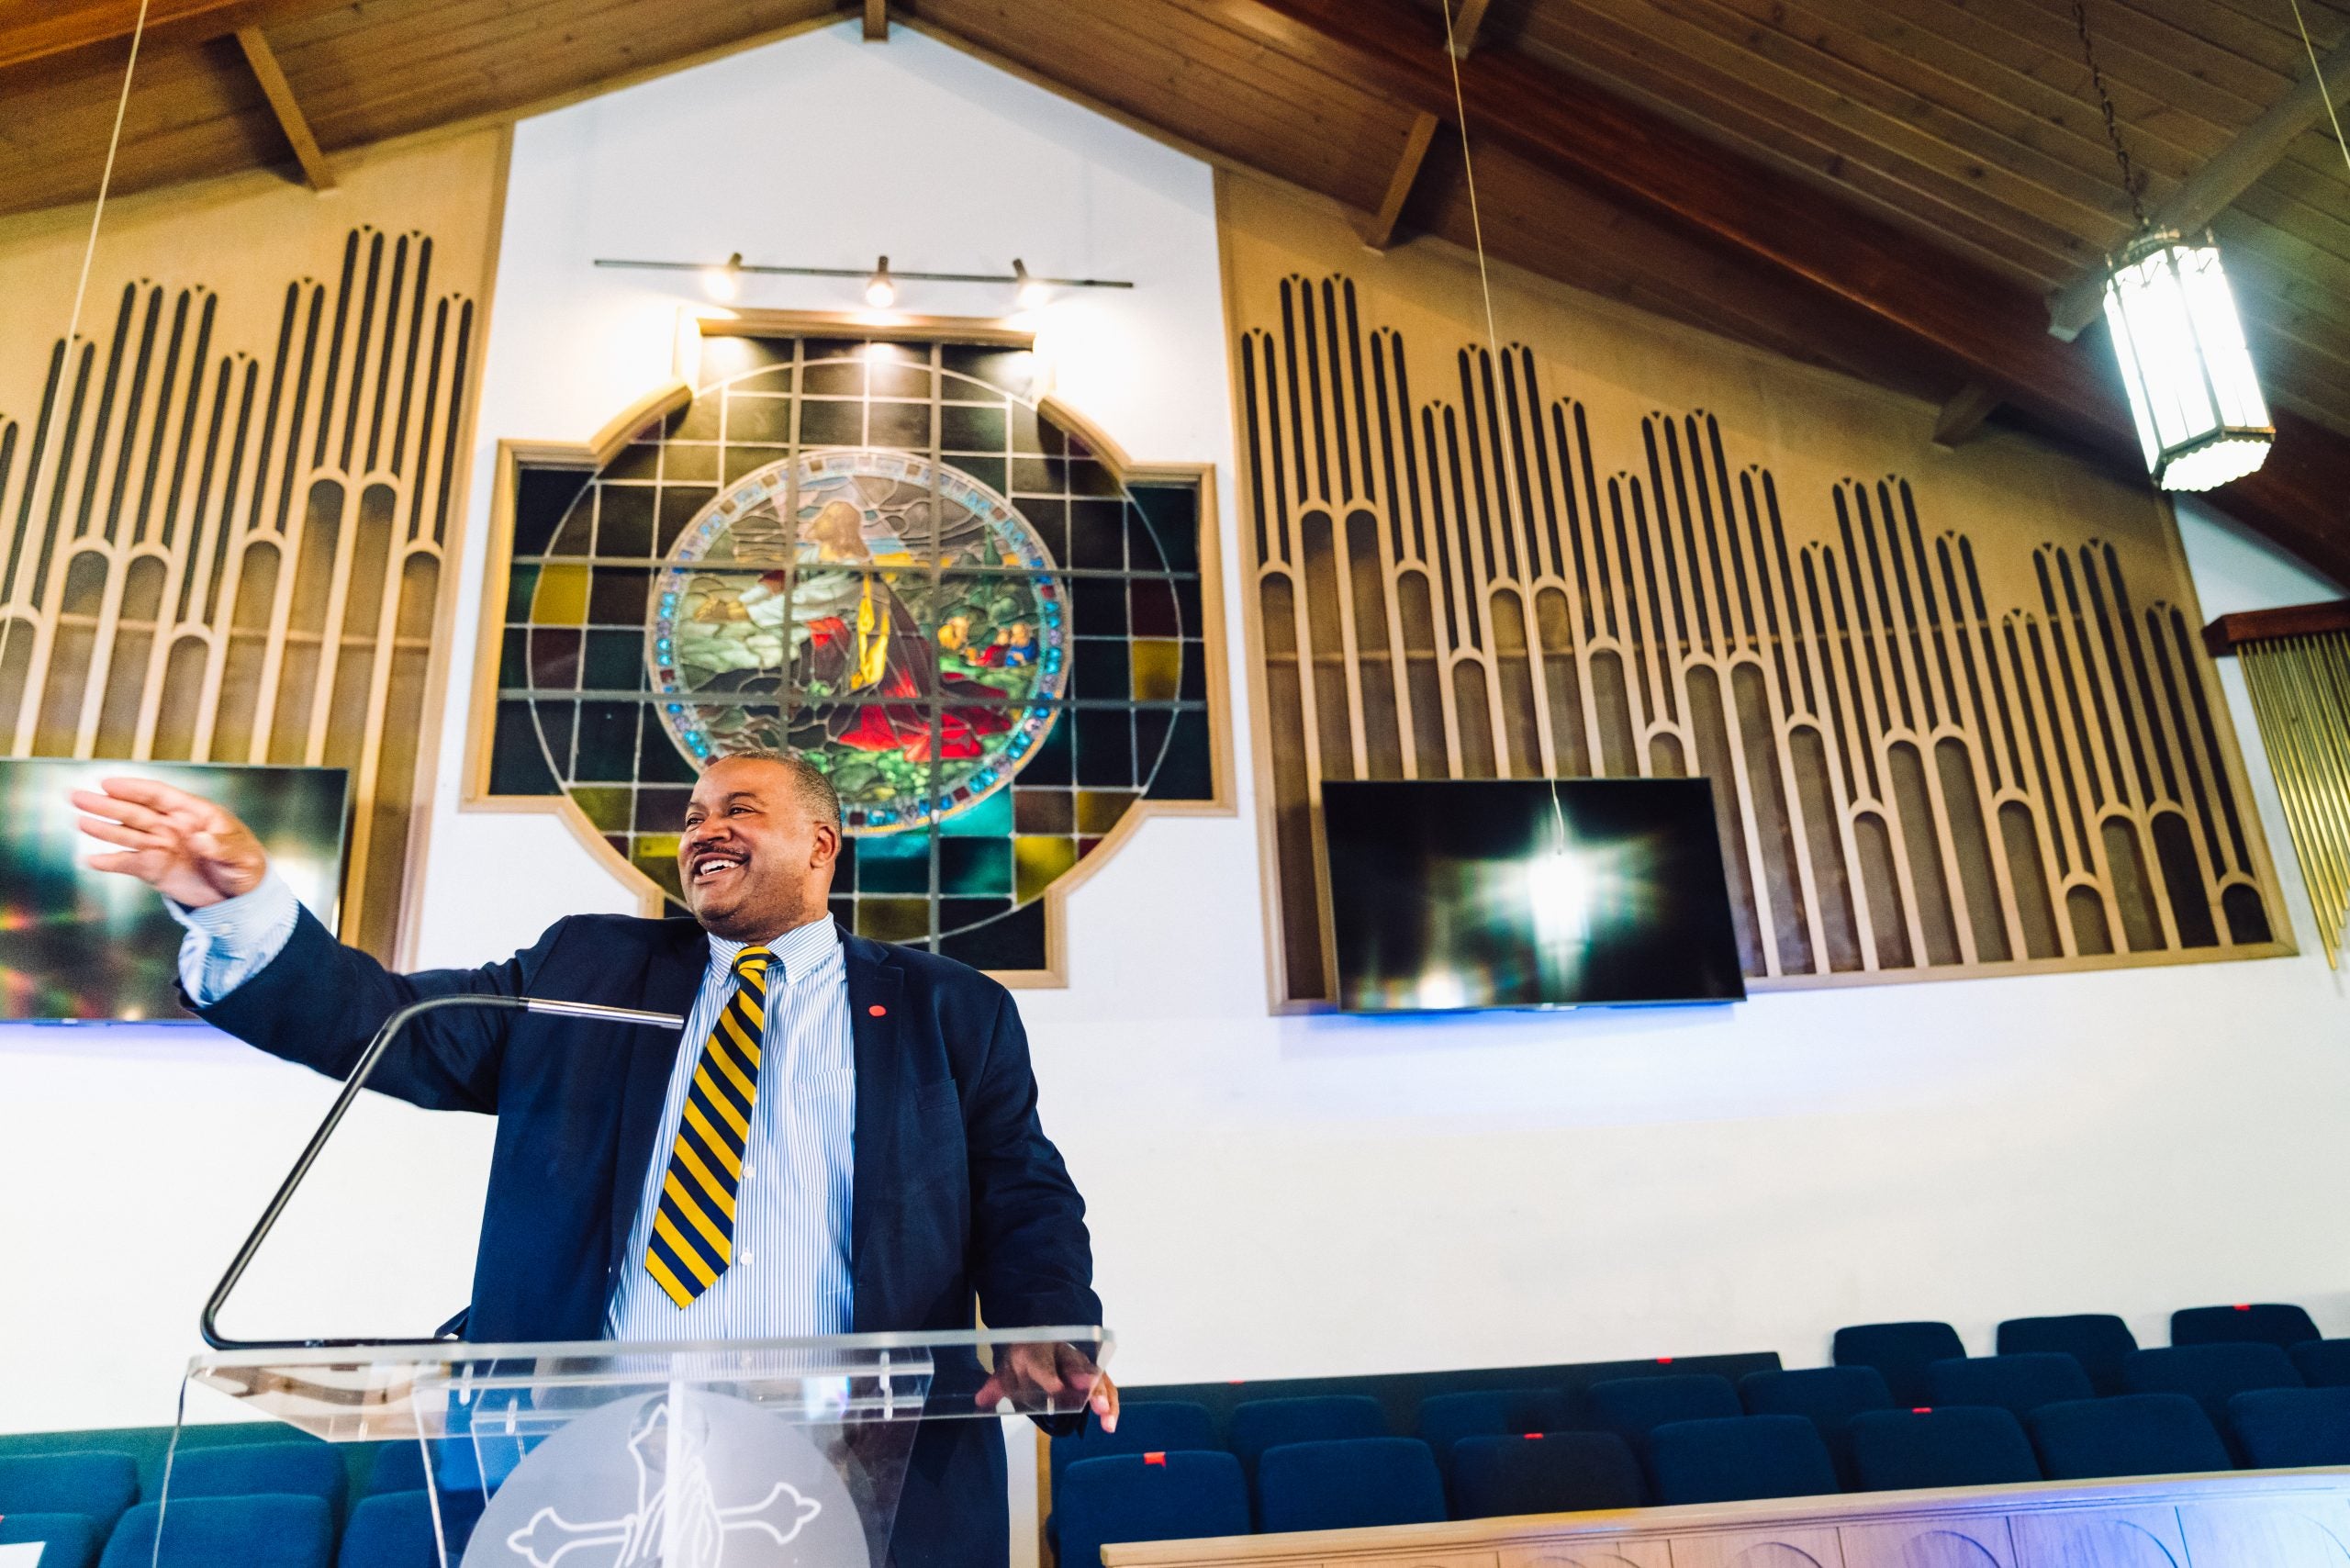 Reverend Rodrick K. Burton, the pastor of New Northside Missionary Baptist Church, addressing his congregation